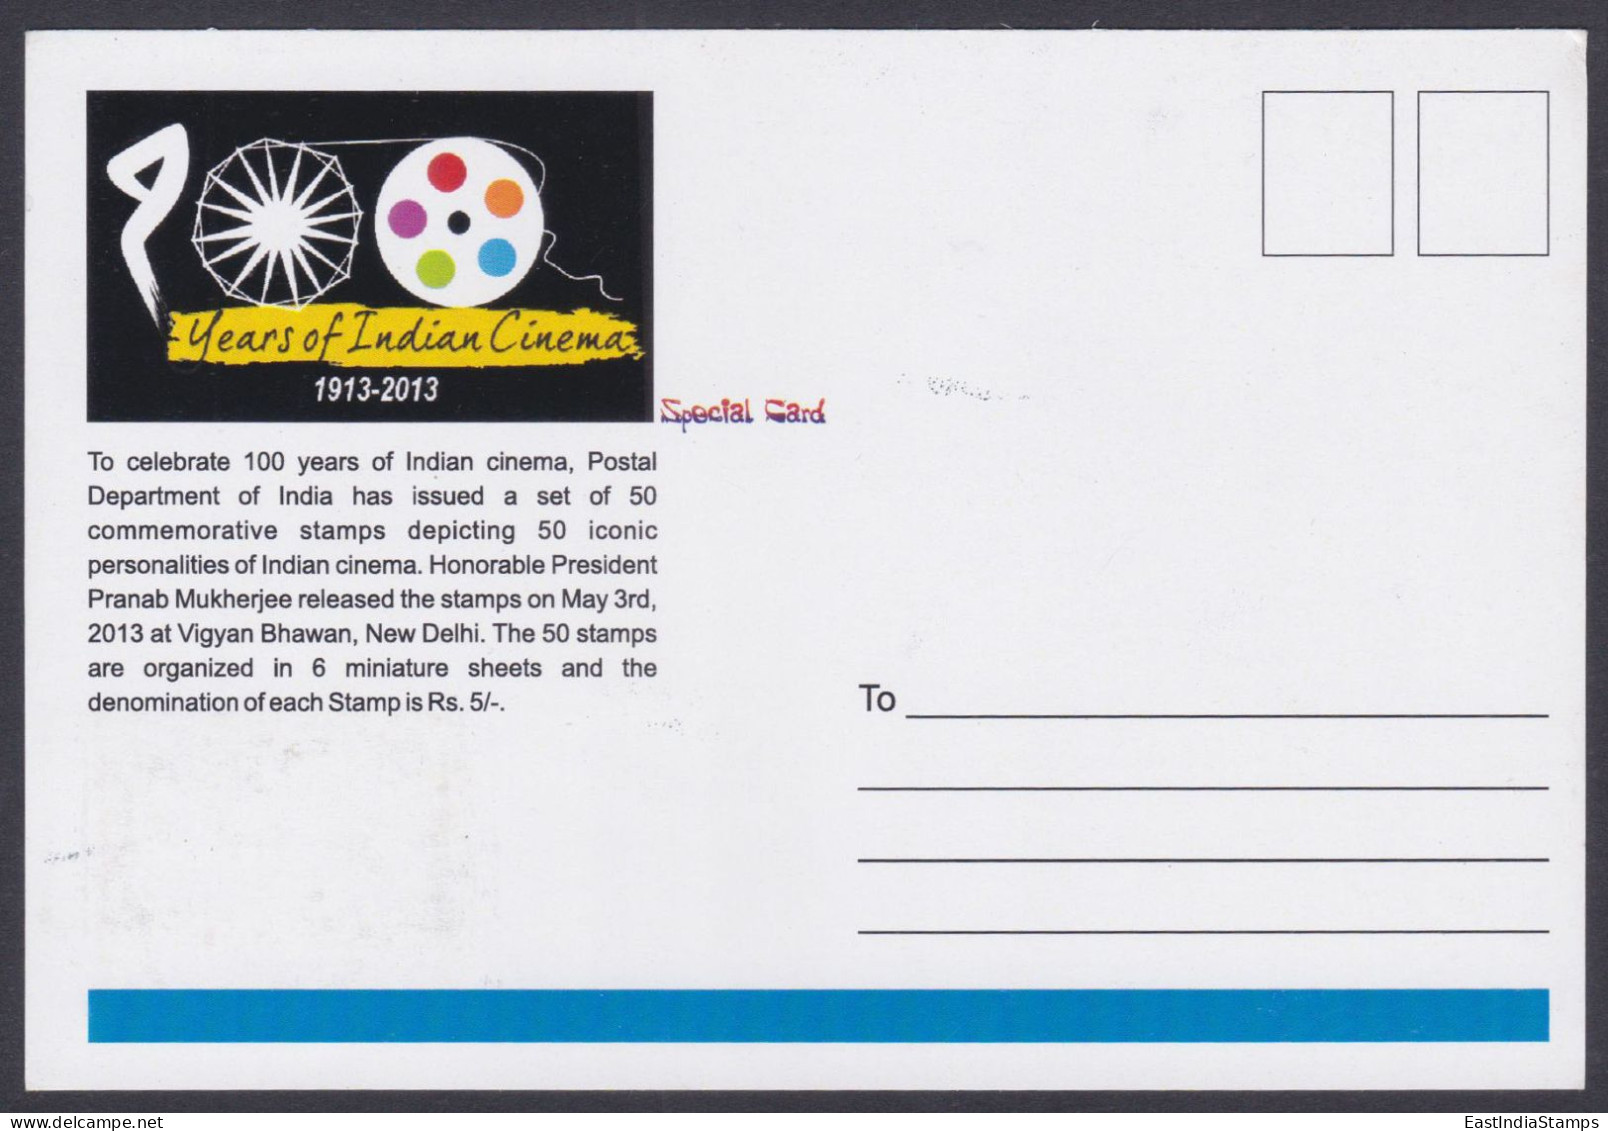 Inde India 2013 Maximum Max Card Pritviraj Kapoor, Indian Actor, Bollywood, Hindi Cinema, Film - Covers & Documents